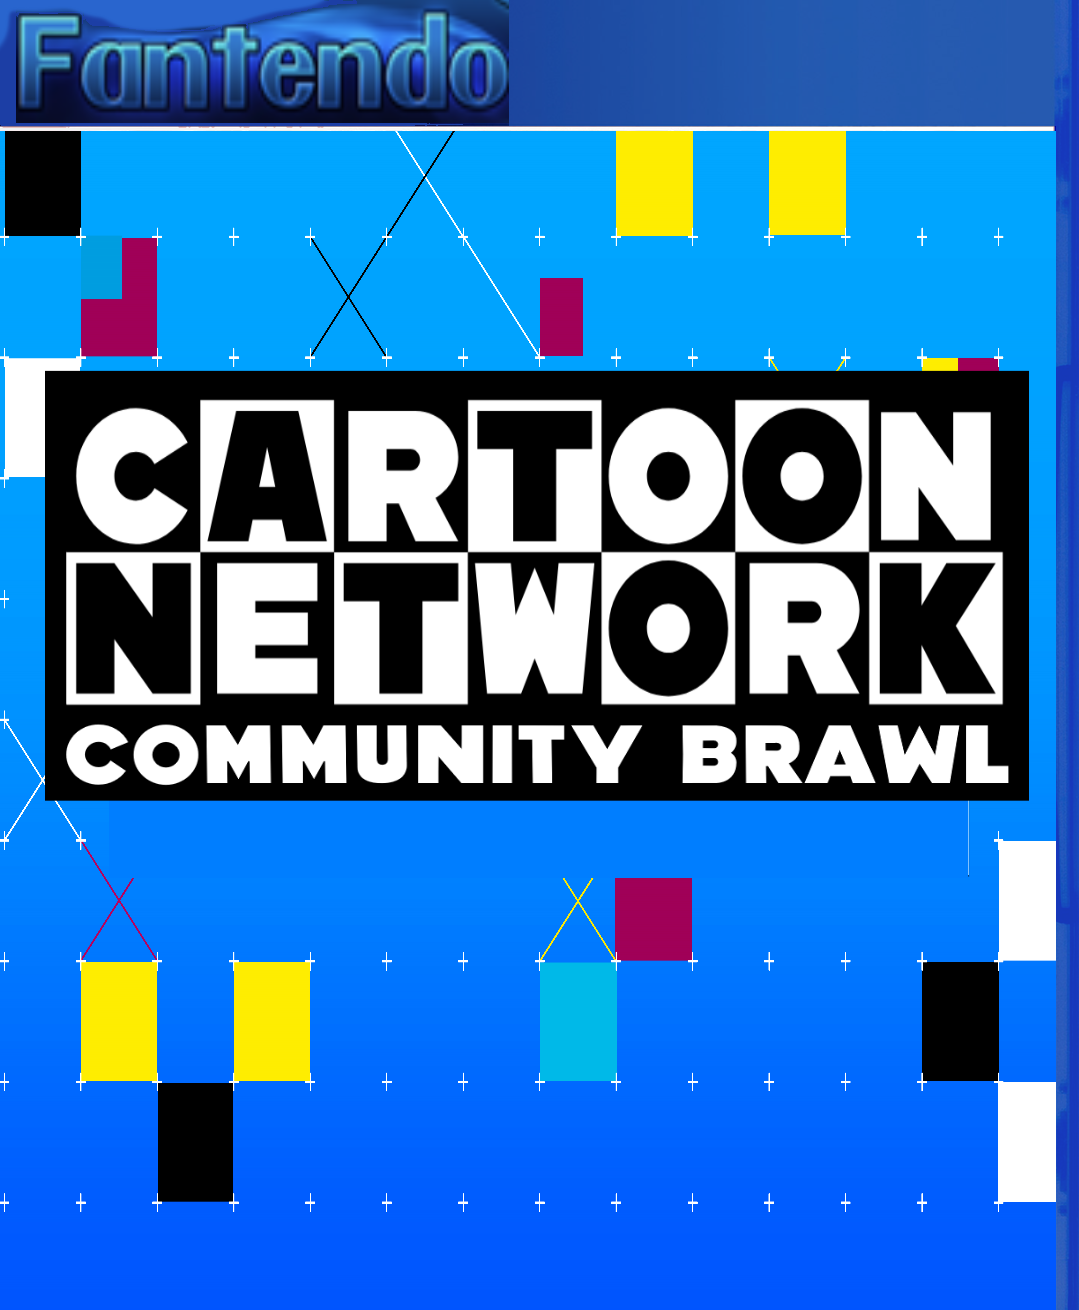 Super Cartoon Network Free For All, Fantendo - Game Ideas & More